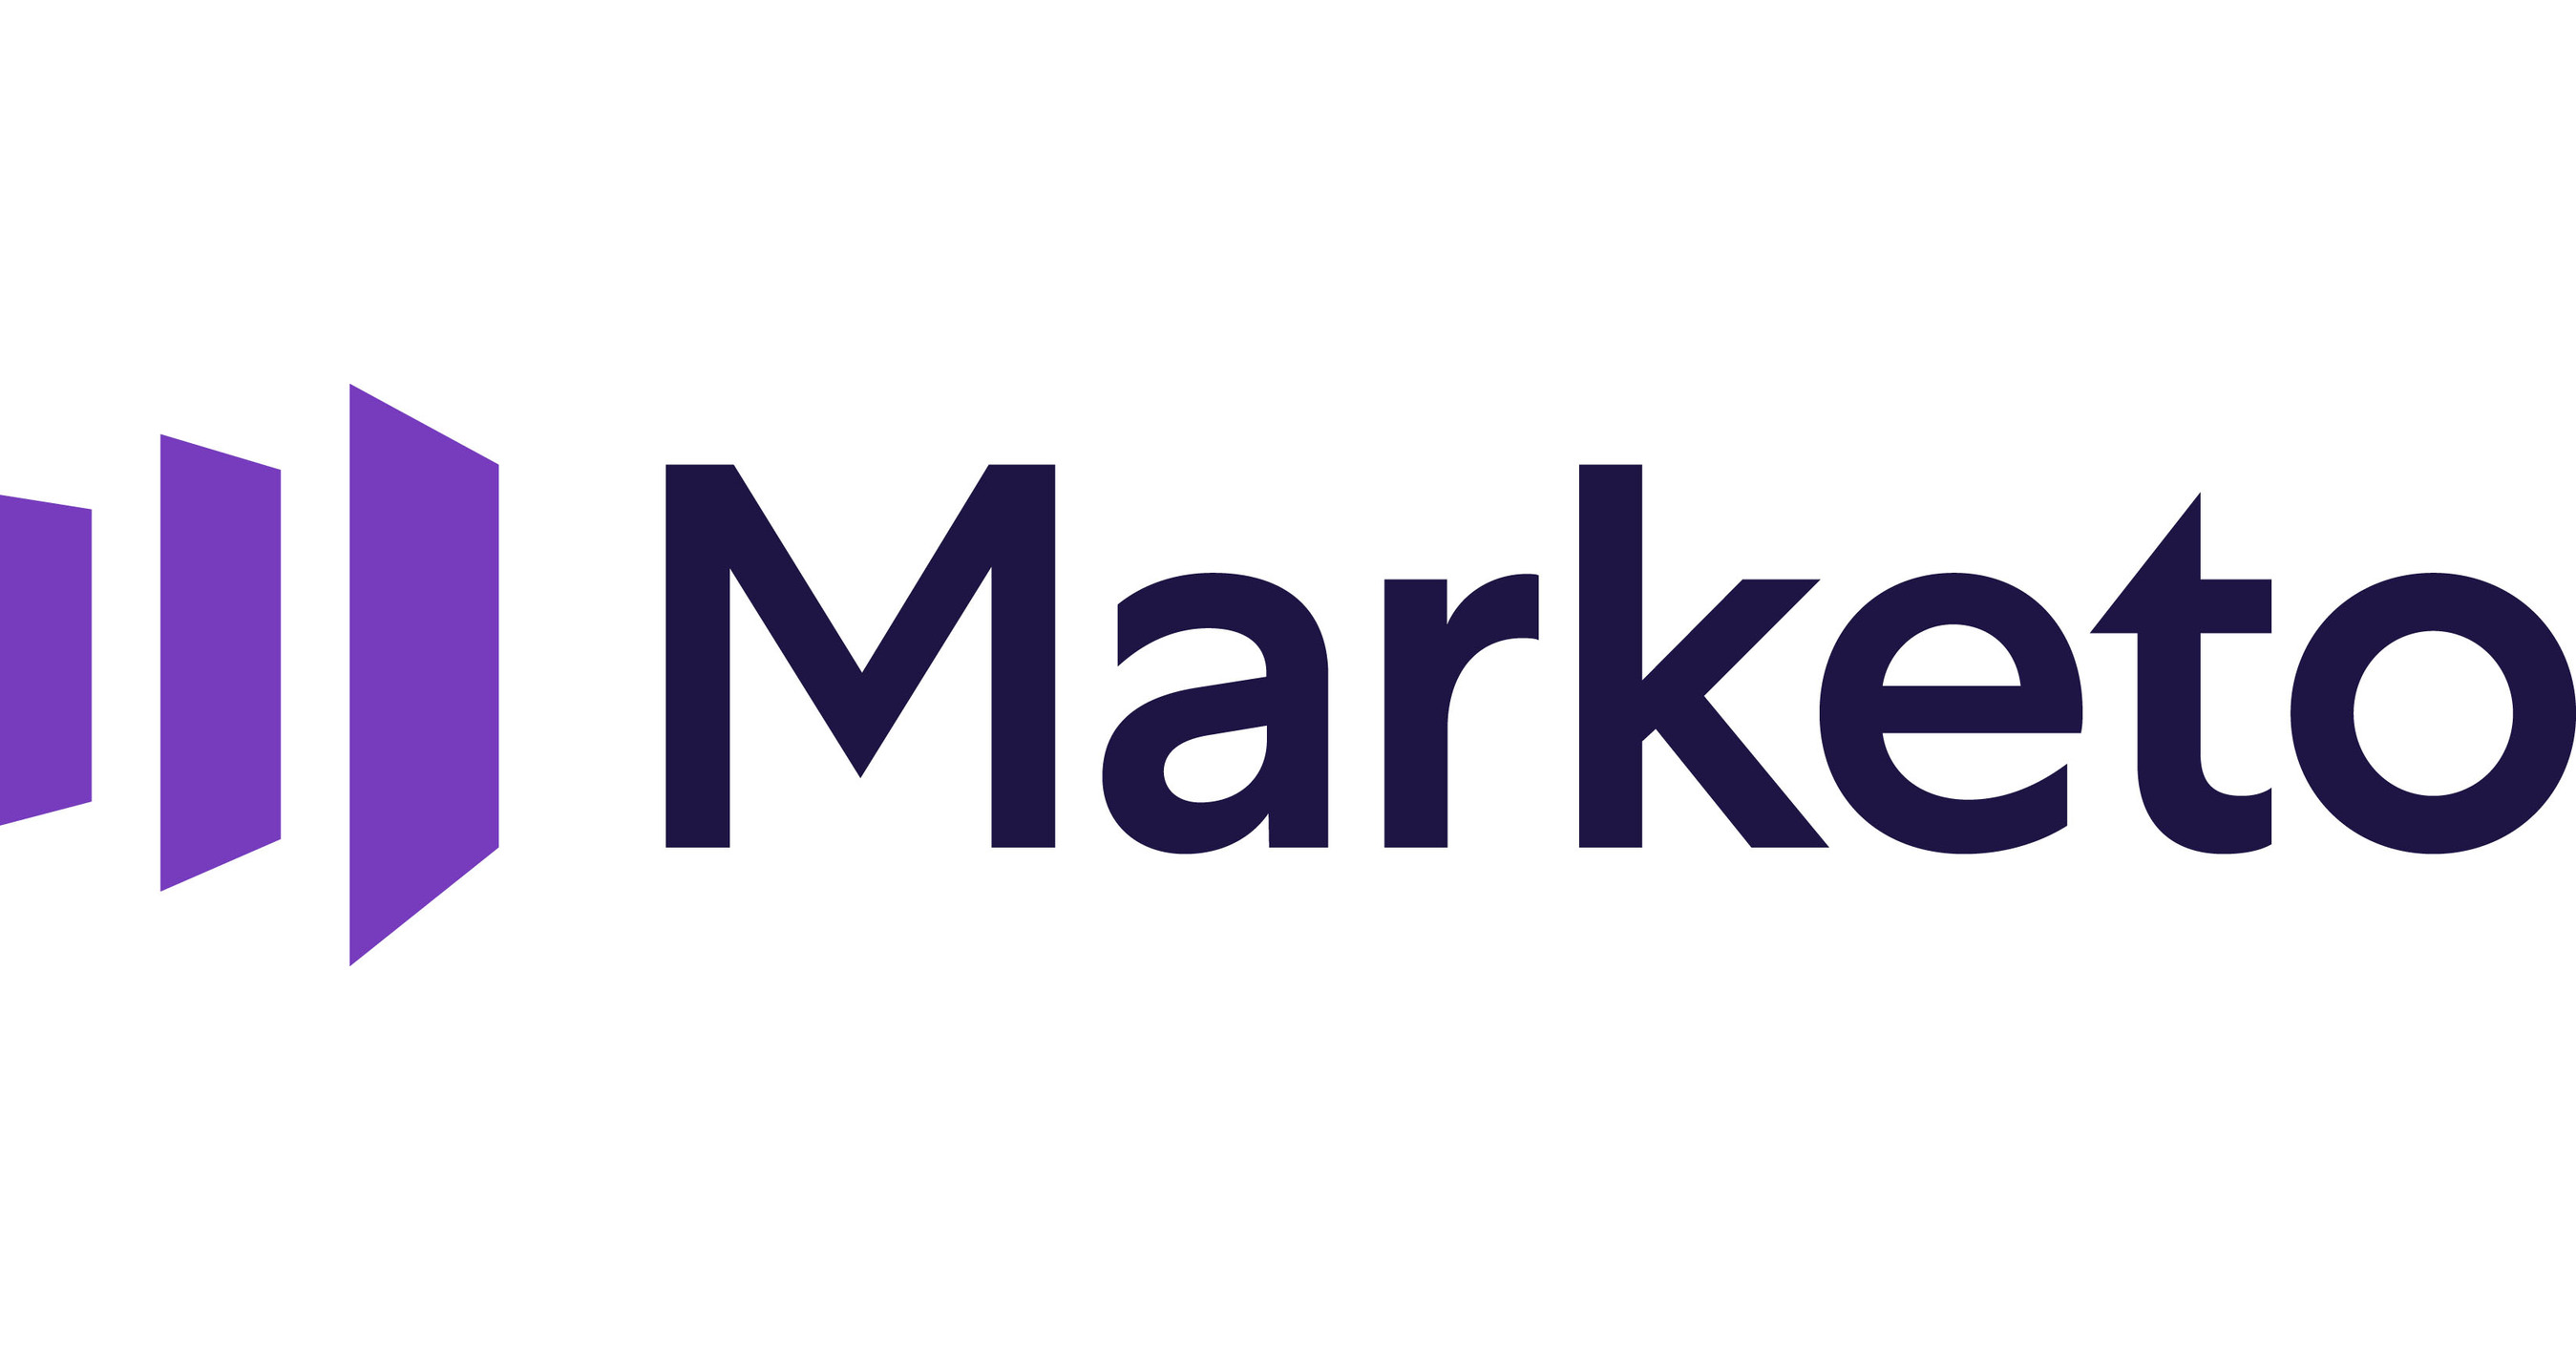 A purple logo for Marketo, a marketing automation software company